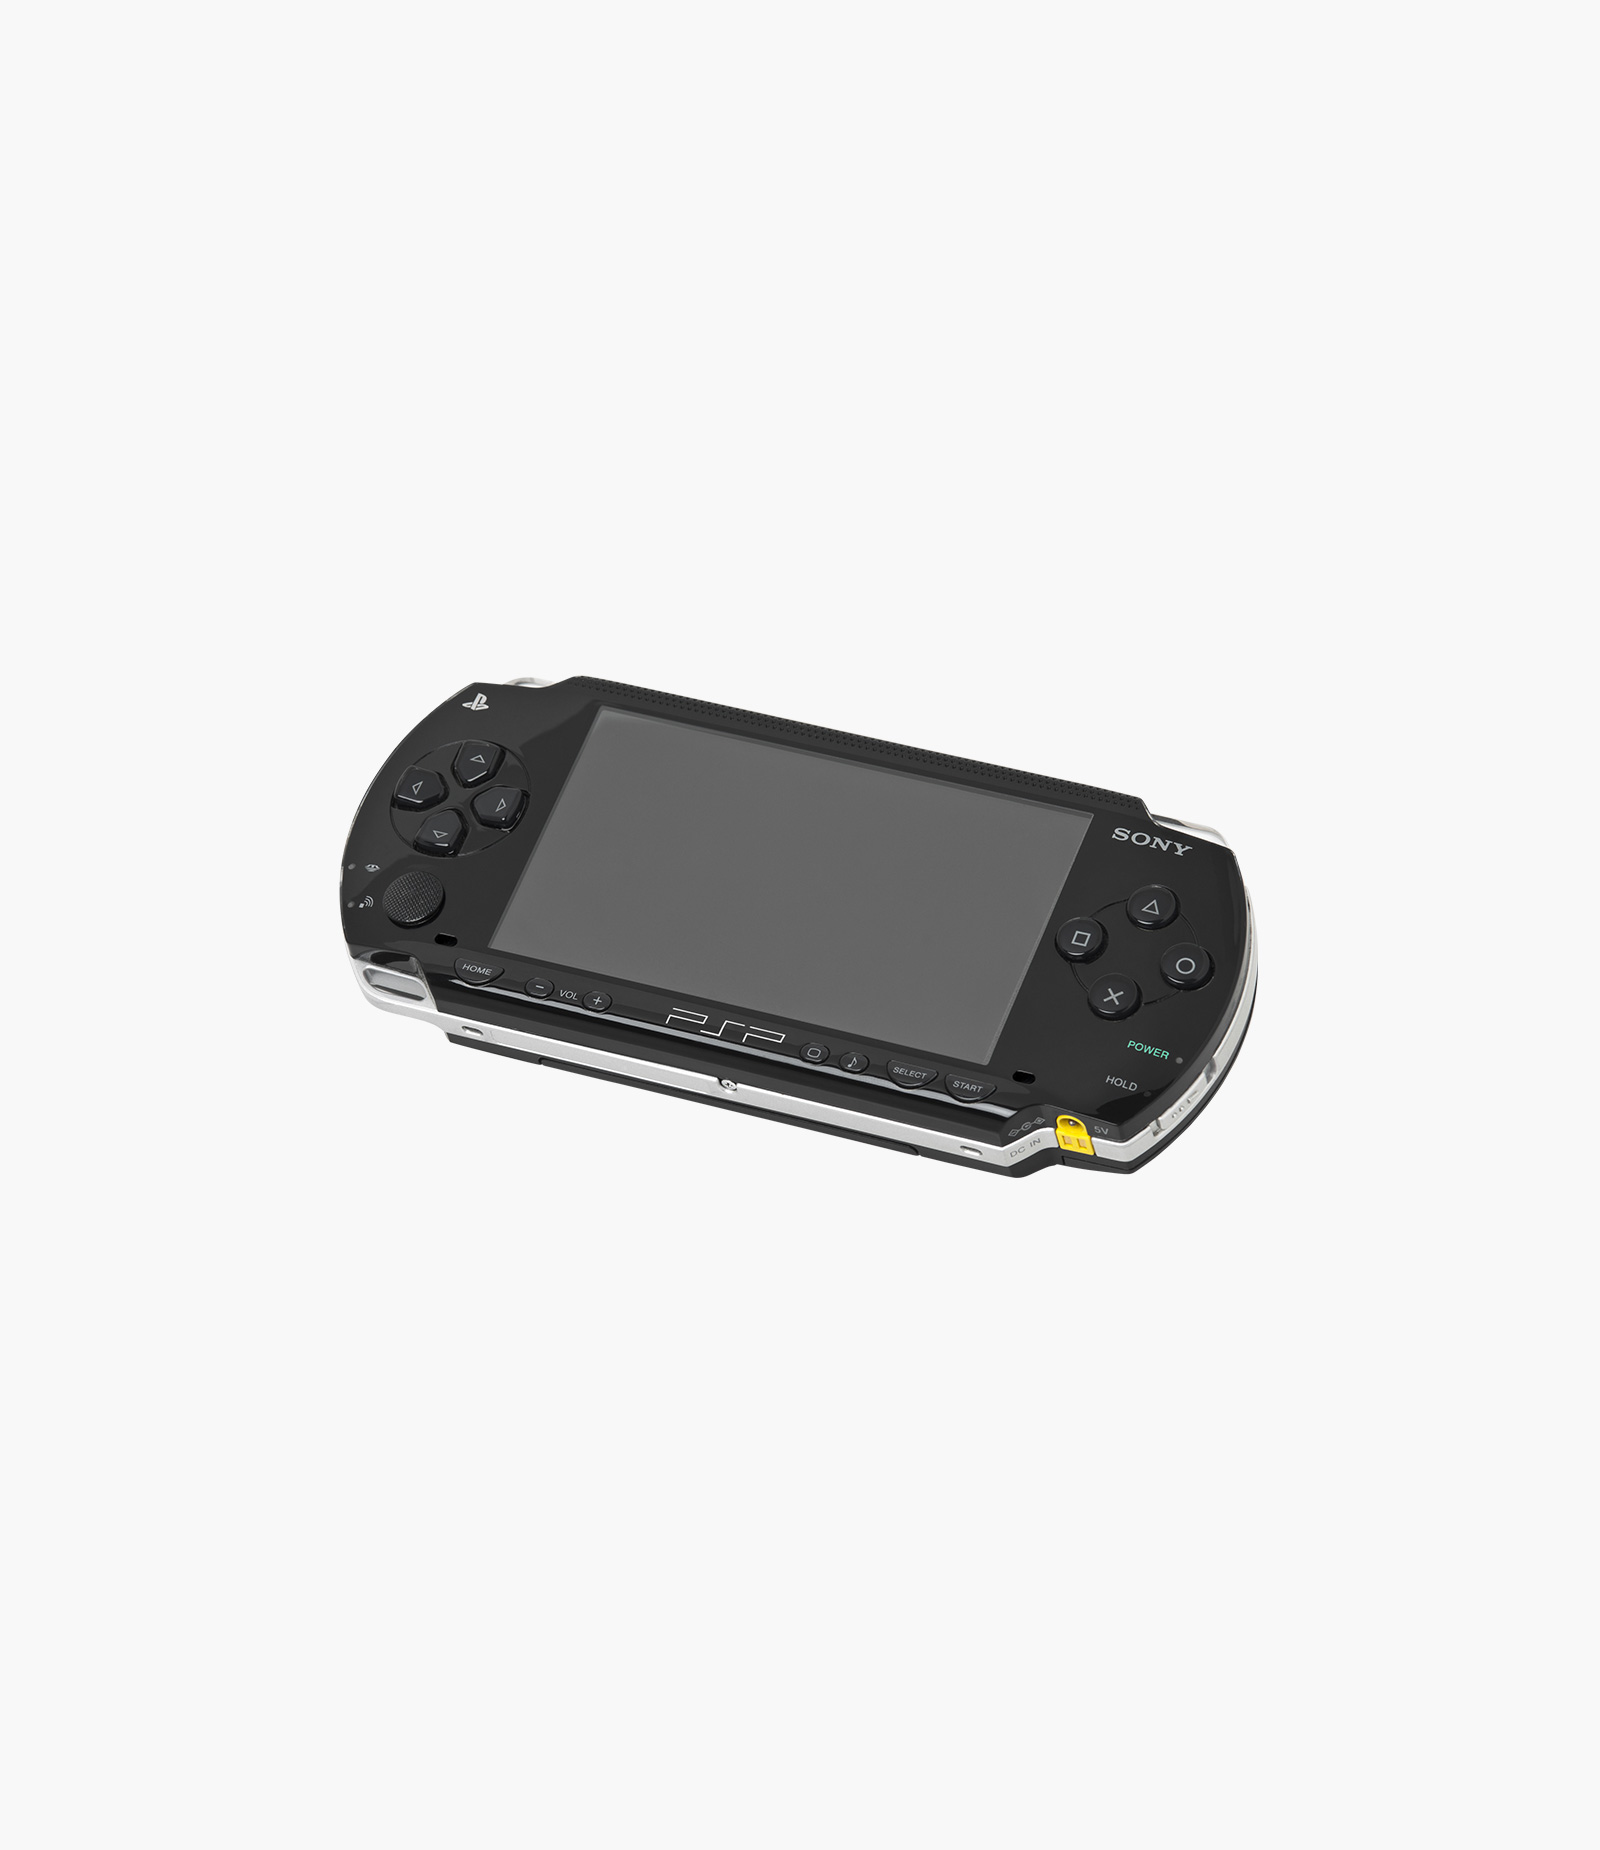 Sony Playstation Portable Core Black Handheld